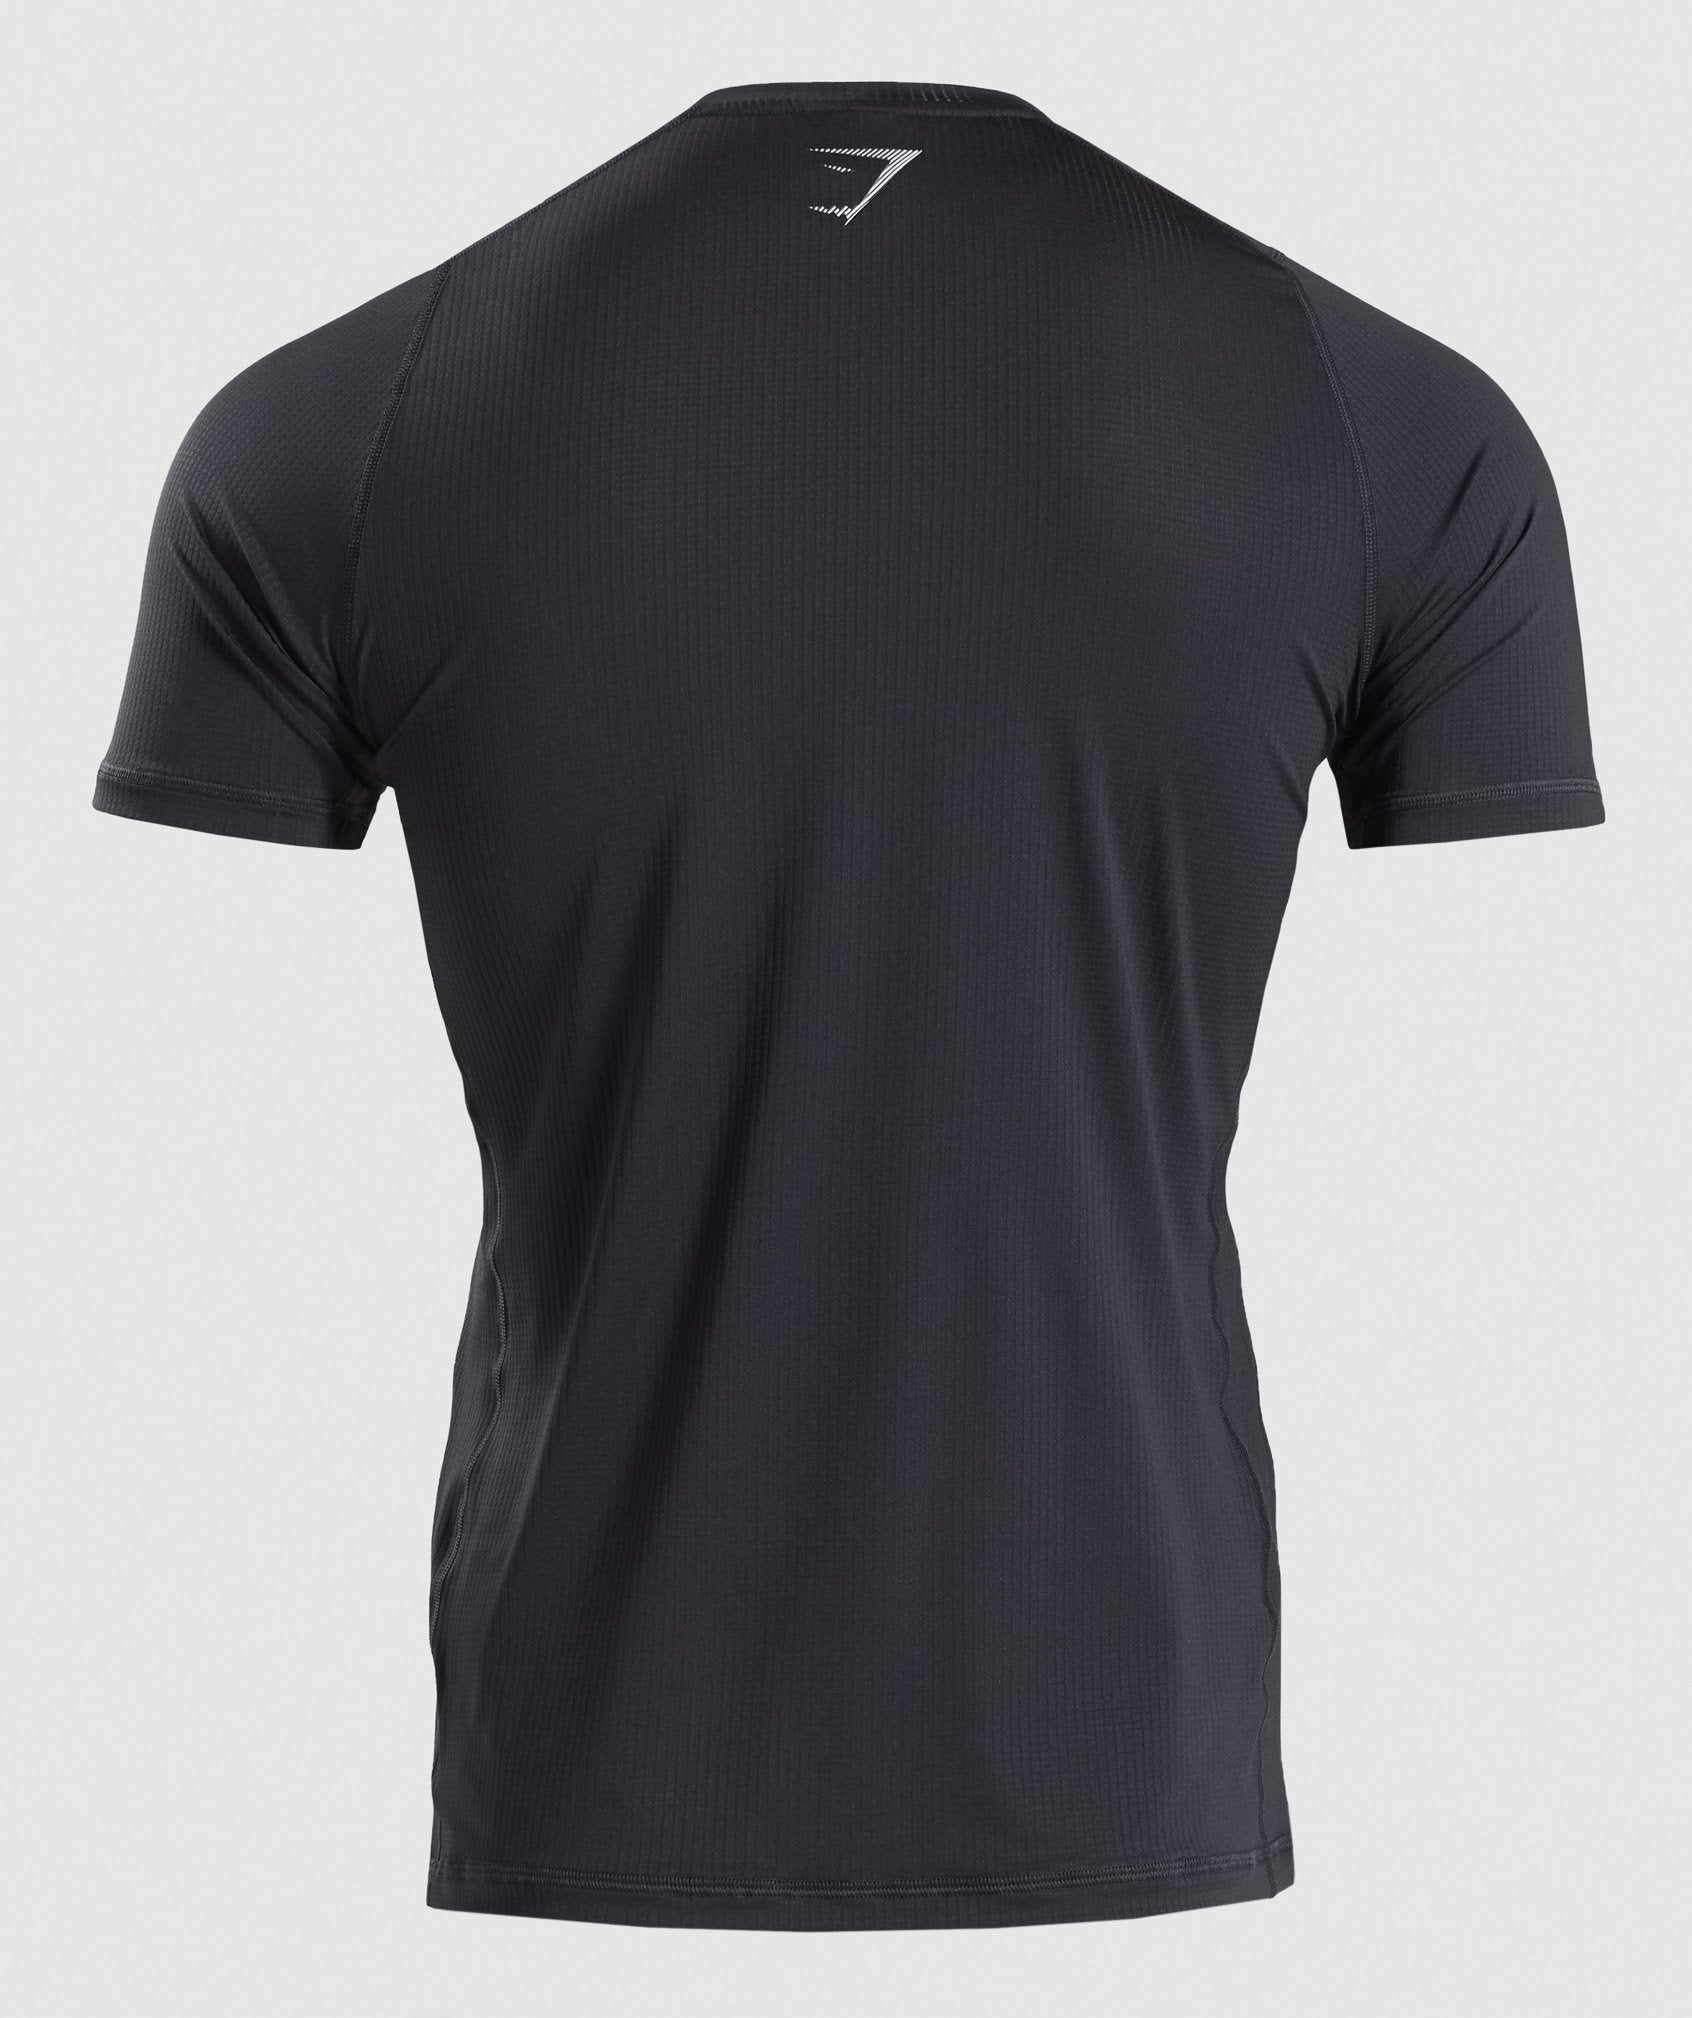 Apex T-Shirt in Black